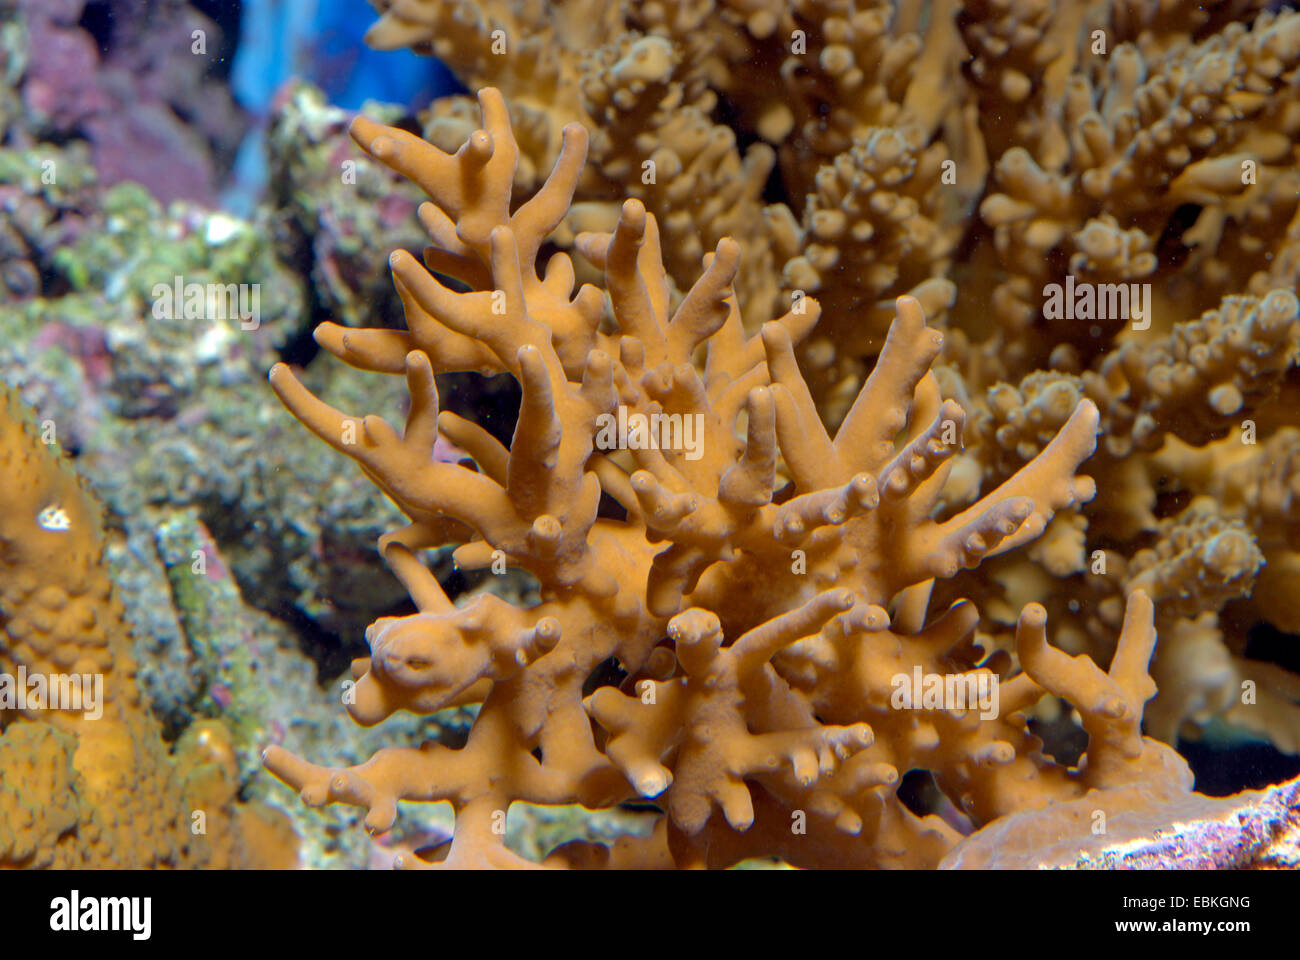 Stony Coral (Acropora spec.), Detailansicht Stockfoto